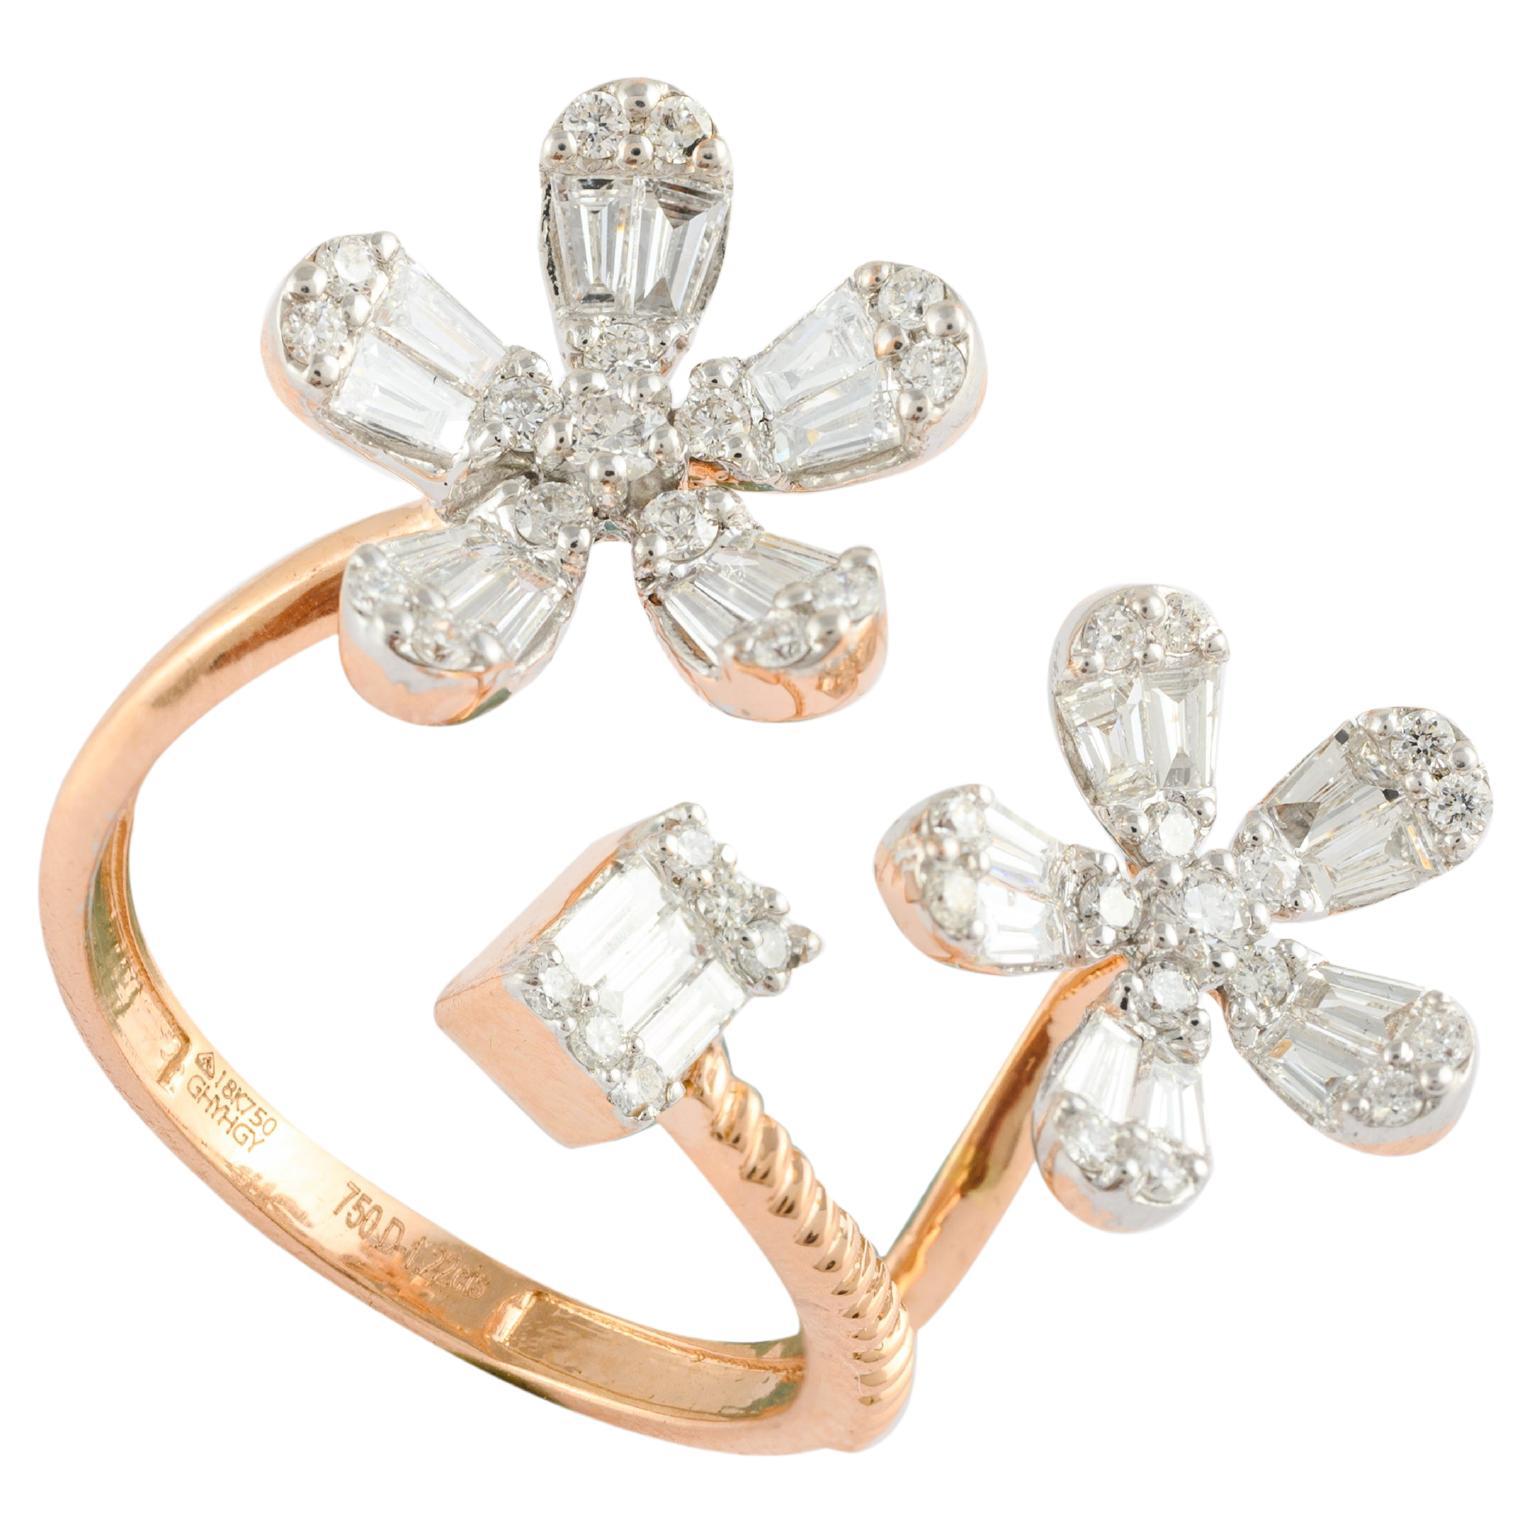 For Sale:  18kt Solid Rose Gold Designer Women's Stunning Diamond Floral Ring